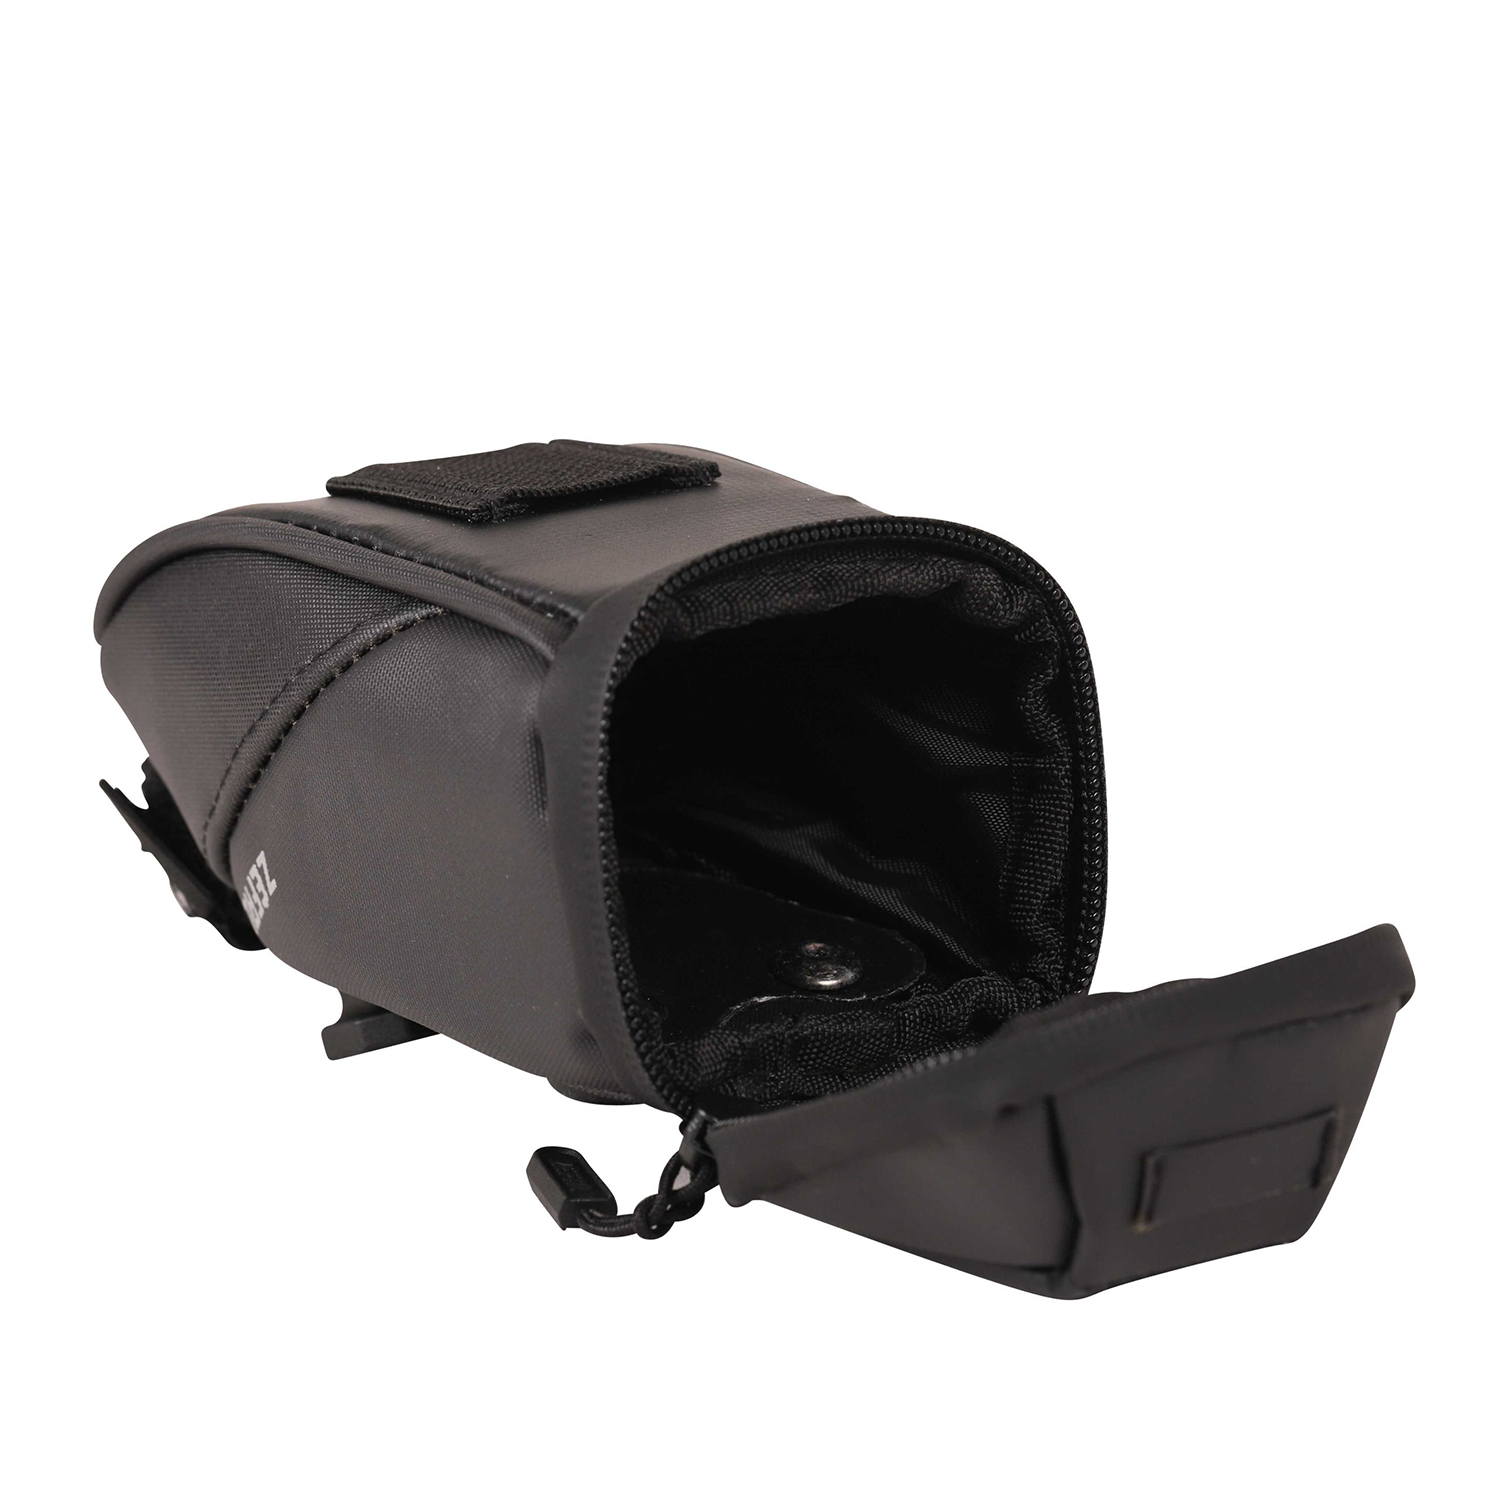 Сумка подседельная Zefal Iron Pack 2 S-Tf Saddle Bag